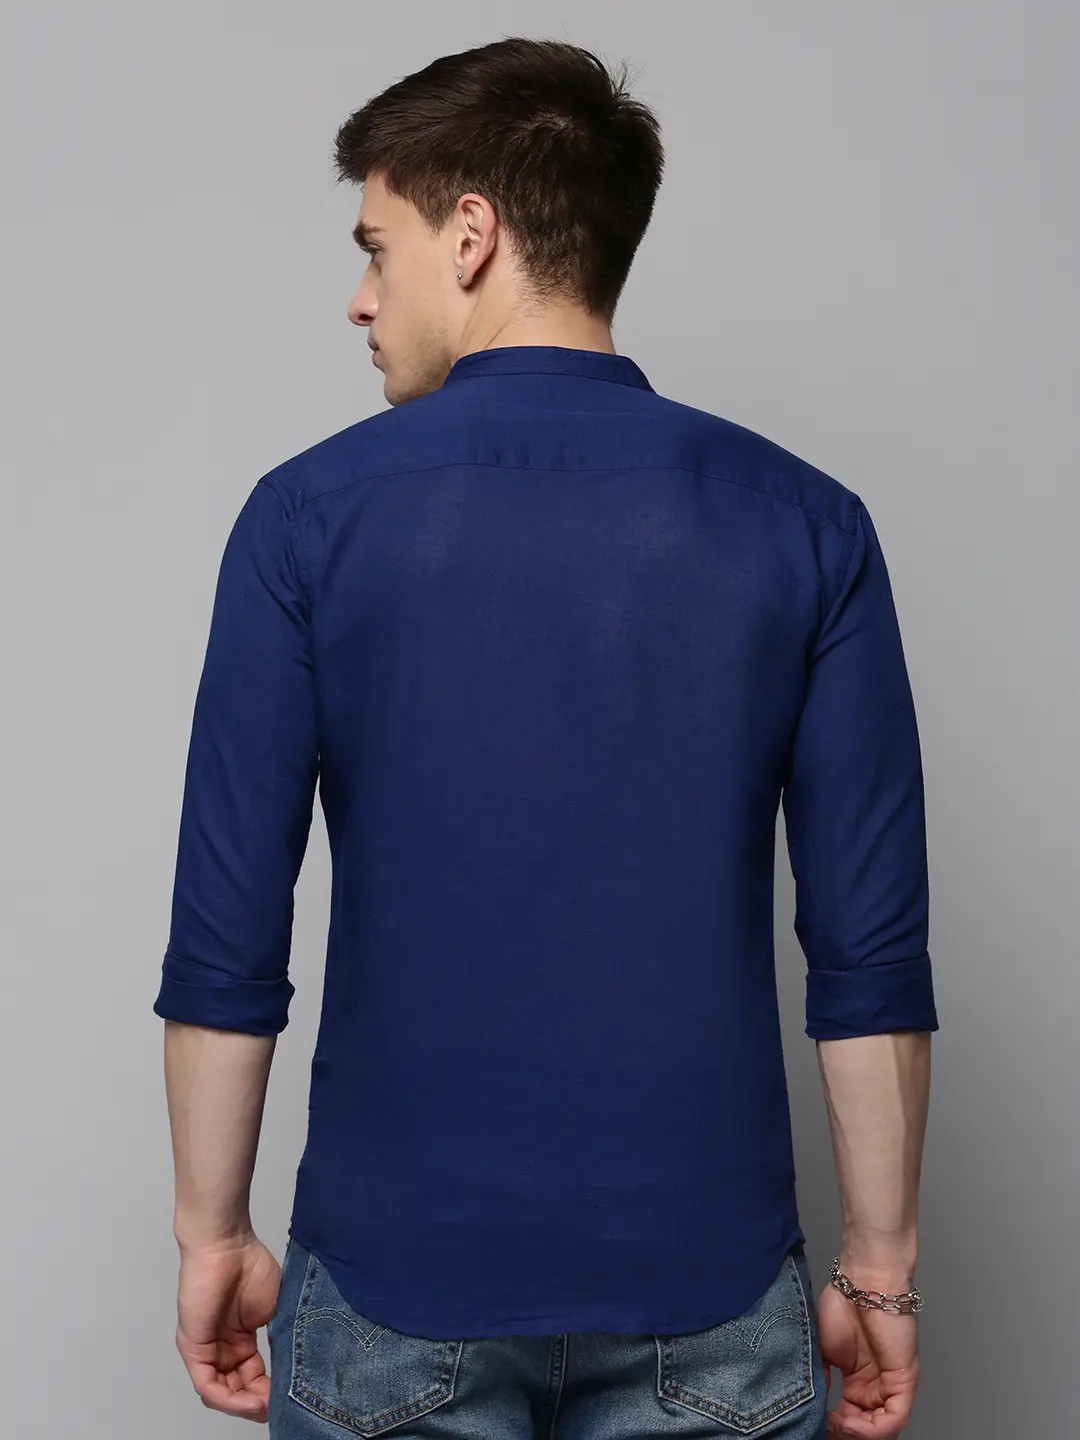 SHOWOFF Men's Mandarin Collar Navy Blue Solid Shirt